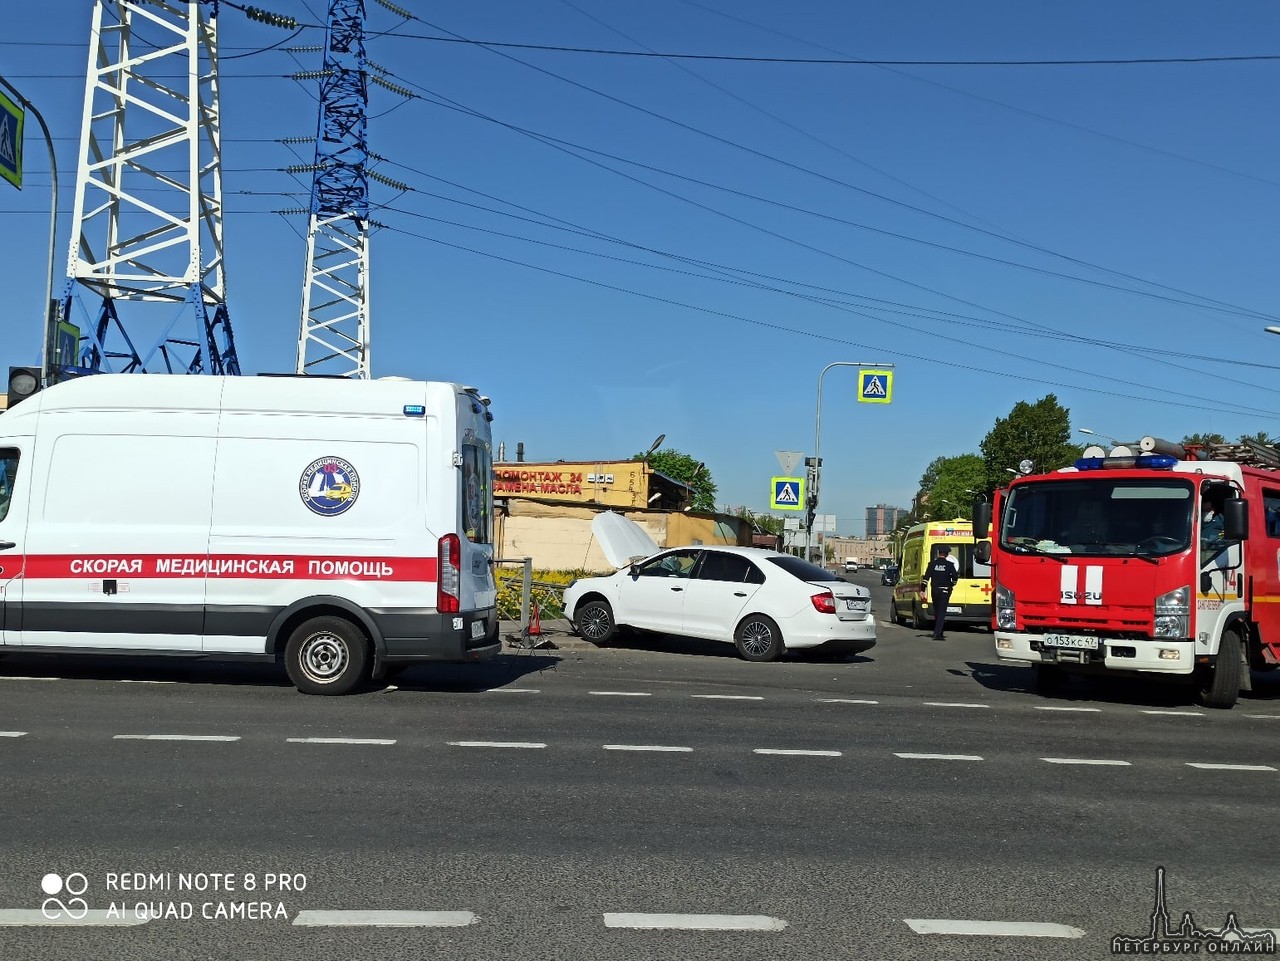 в 8:30 мужчина 39 лет на автомобиле Skoda при повороте налево, с Витебского проспекта на Заставскую,...